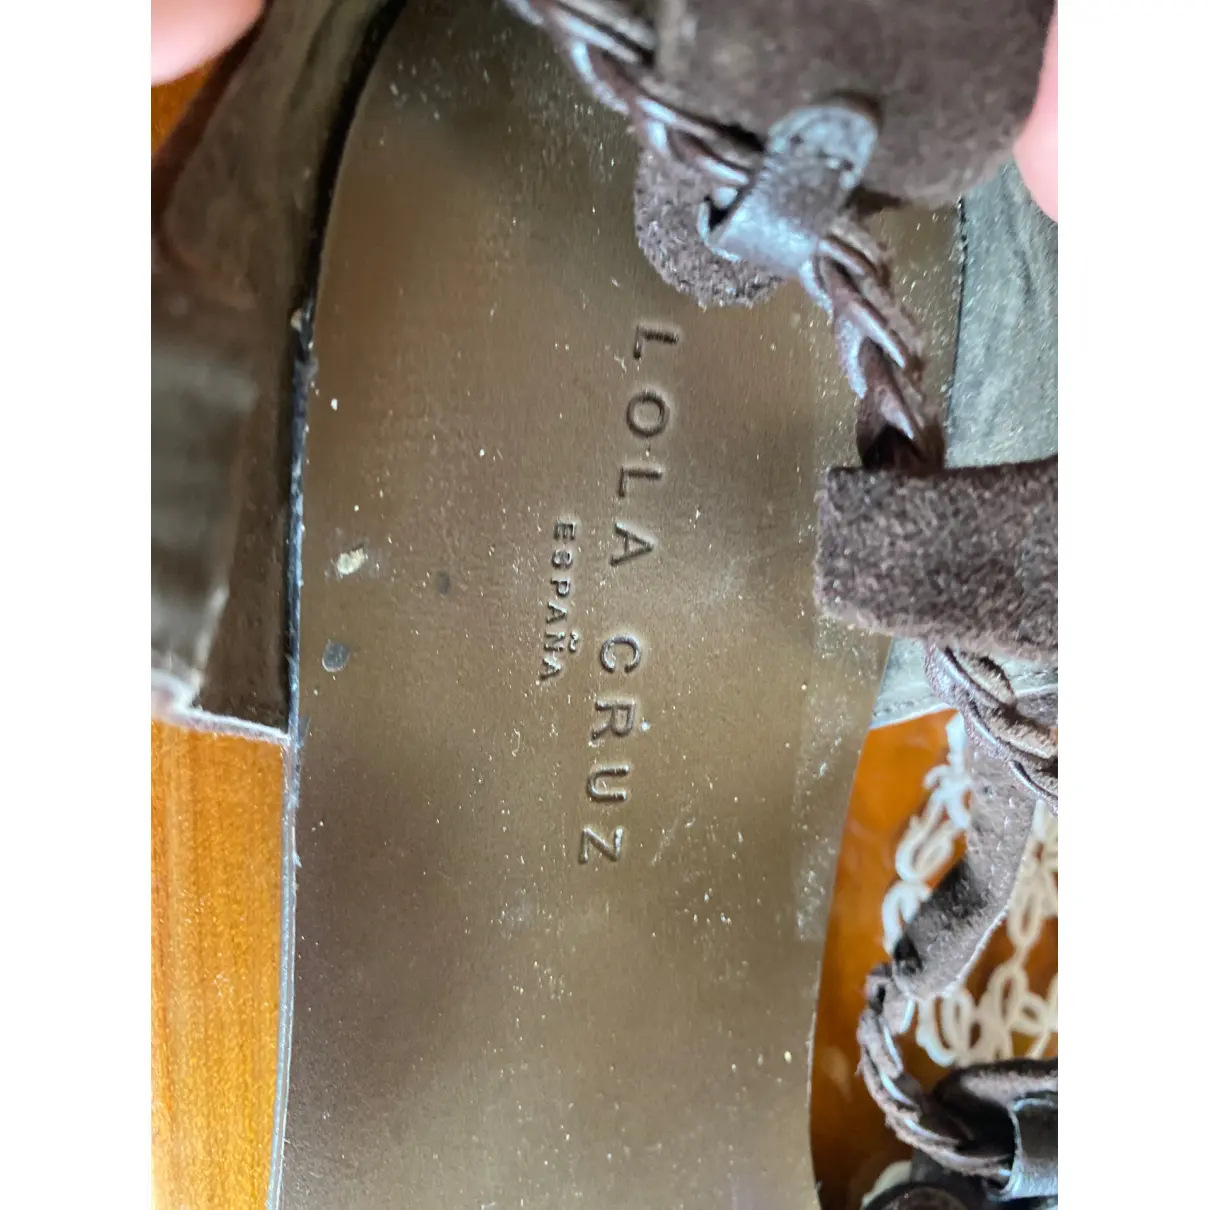 Buy Lola Cruz Leather flip flops online